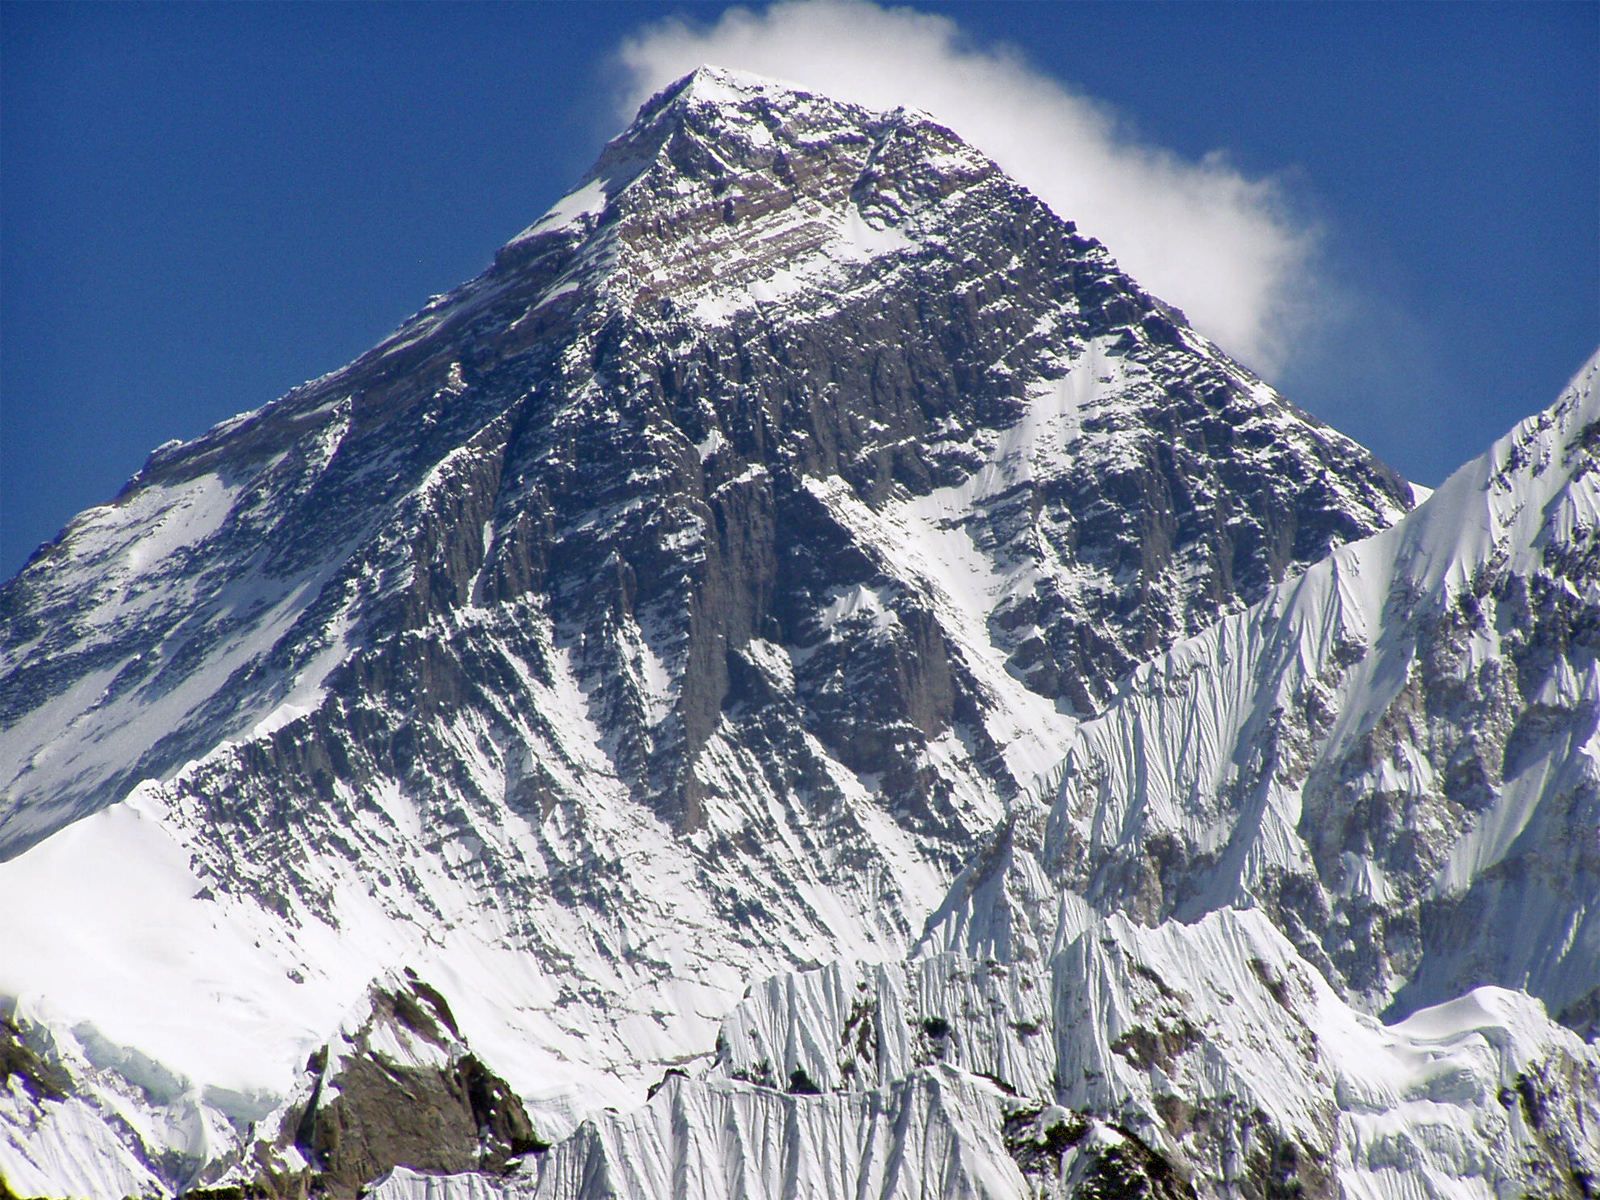 Wallpaper Mount Everest